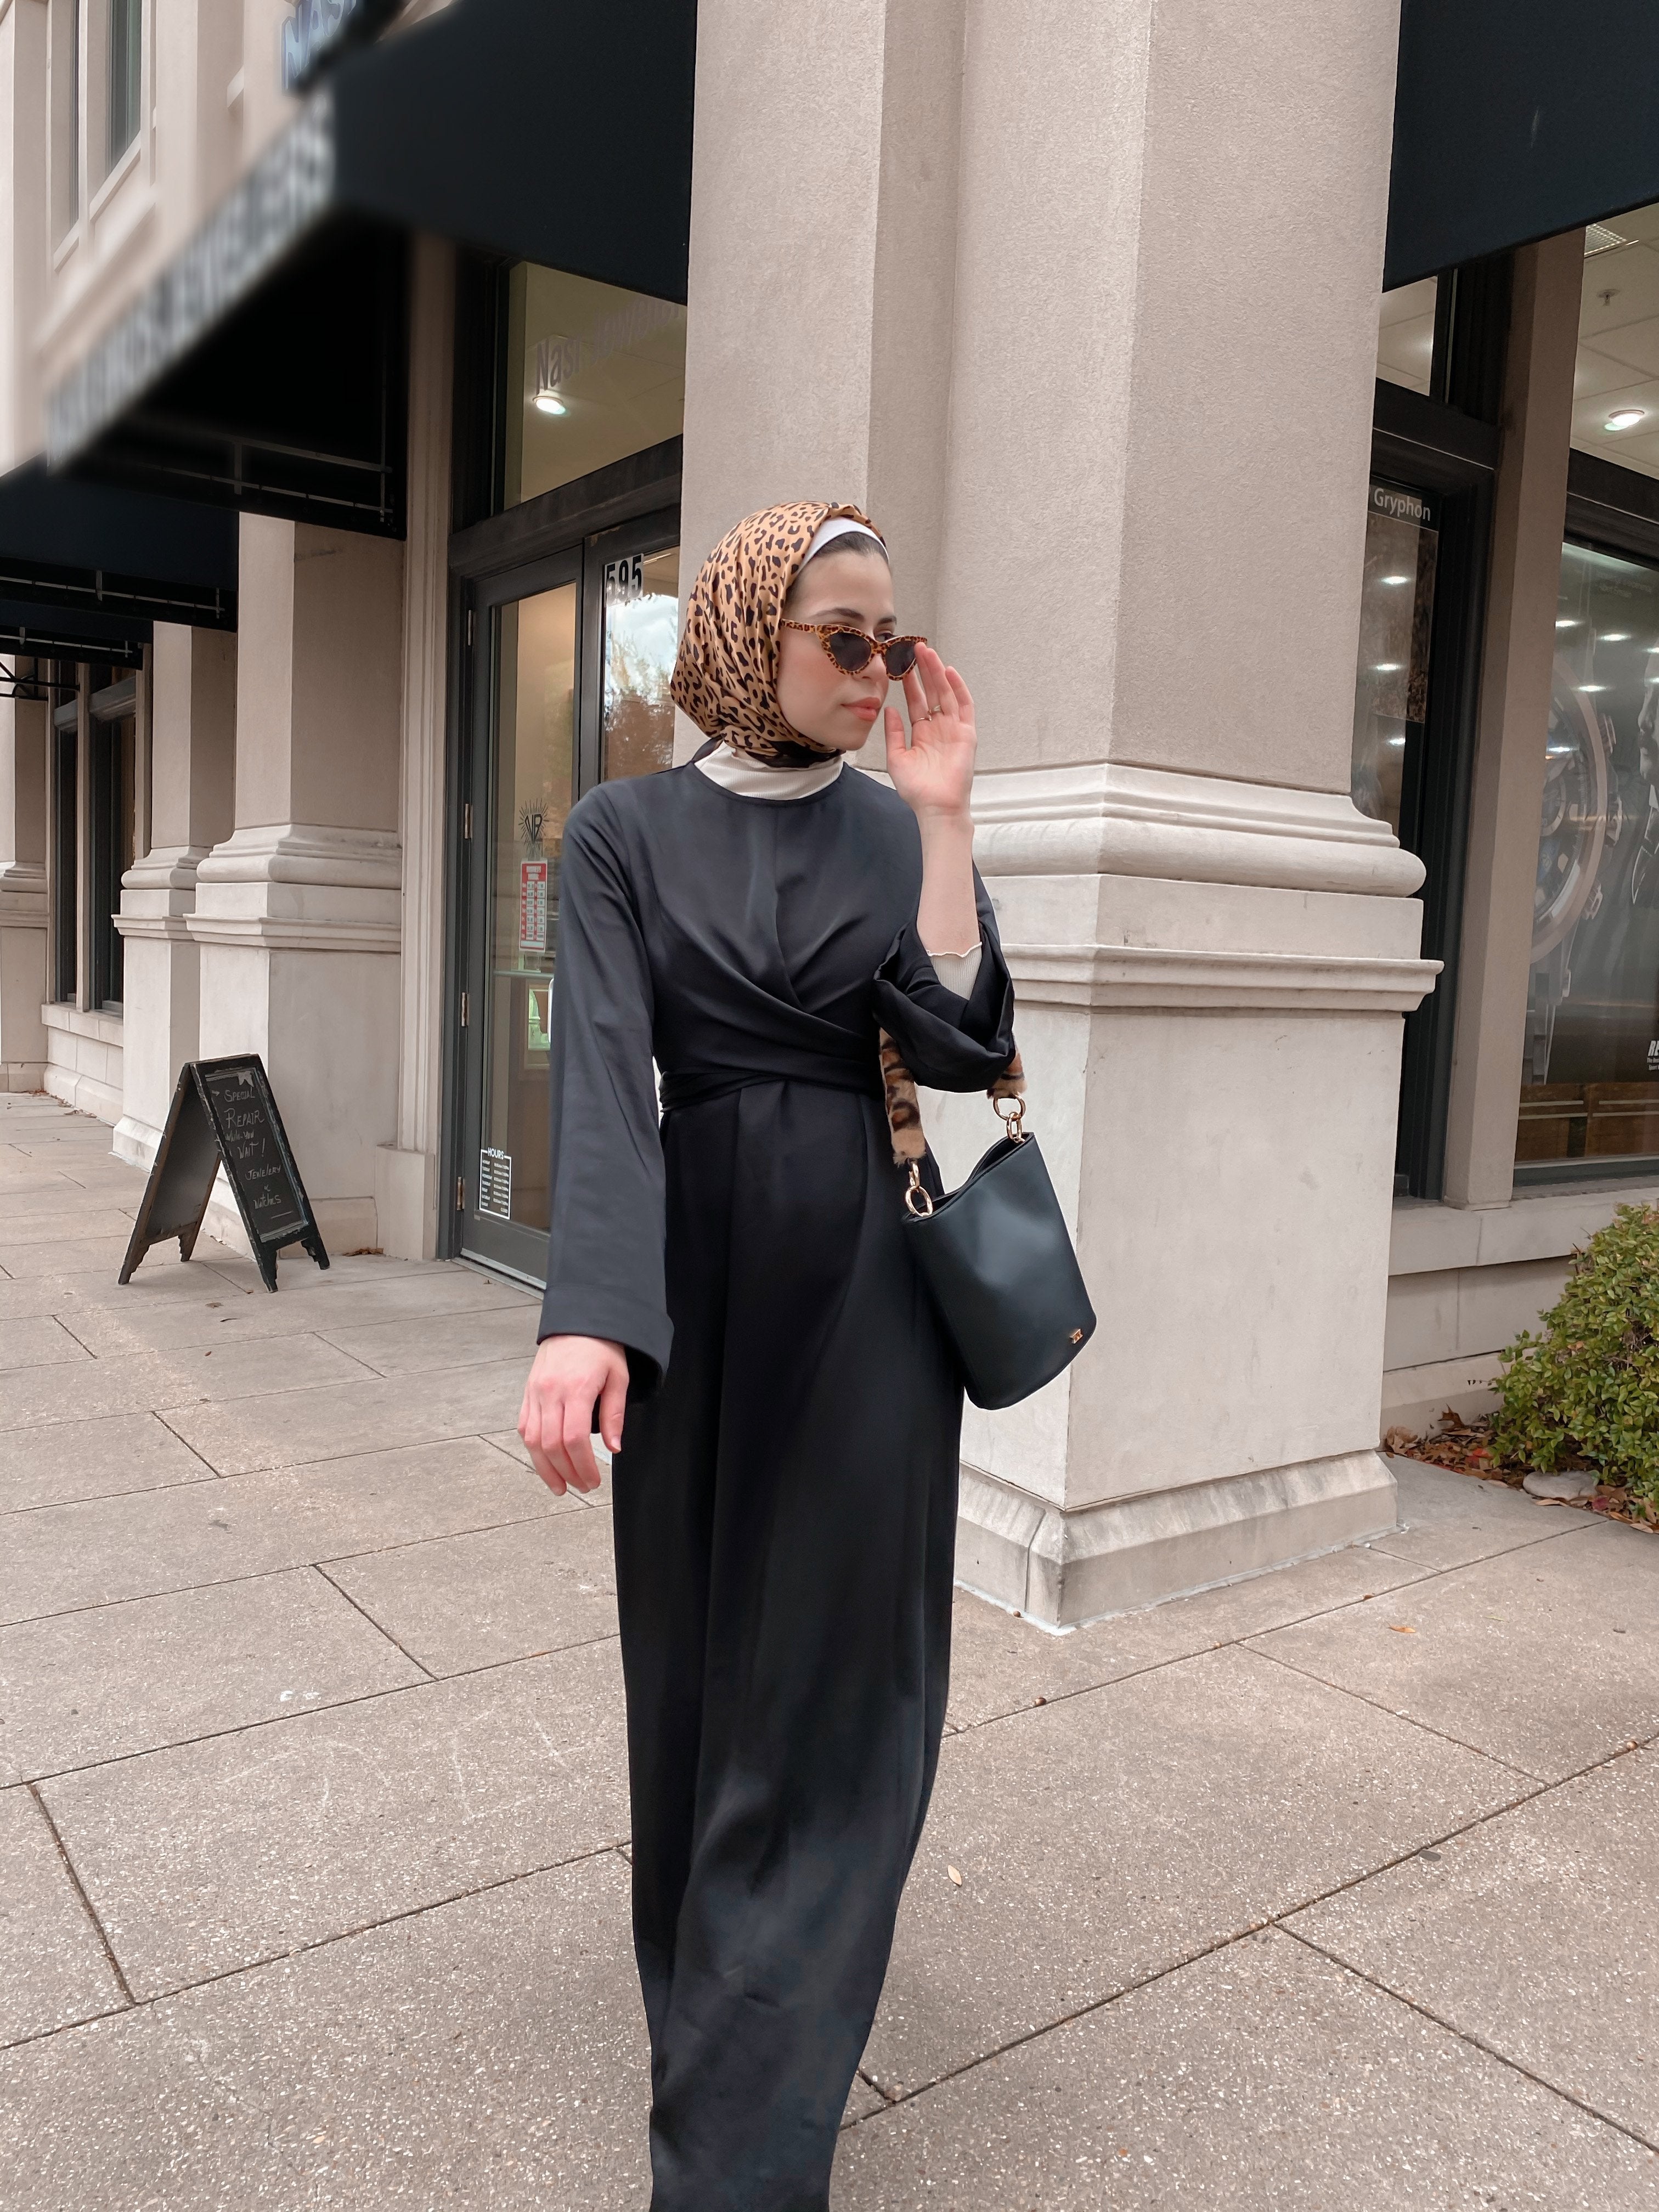 Iman Wrap Dress - Midnight Black-Niswa Fashion